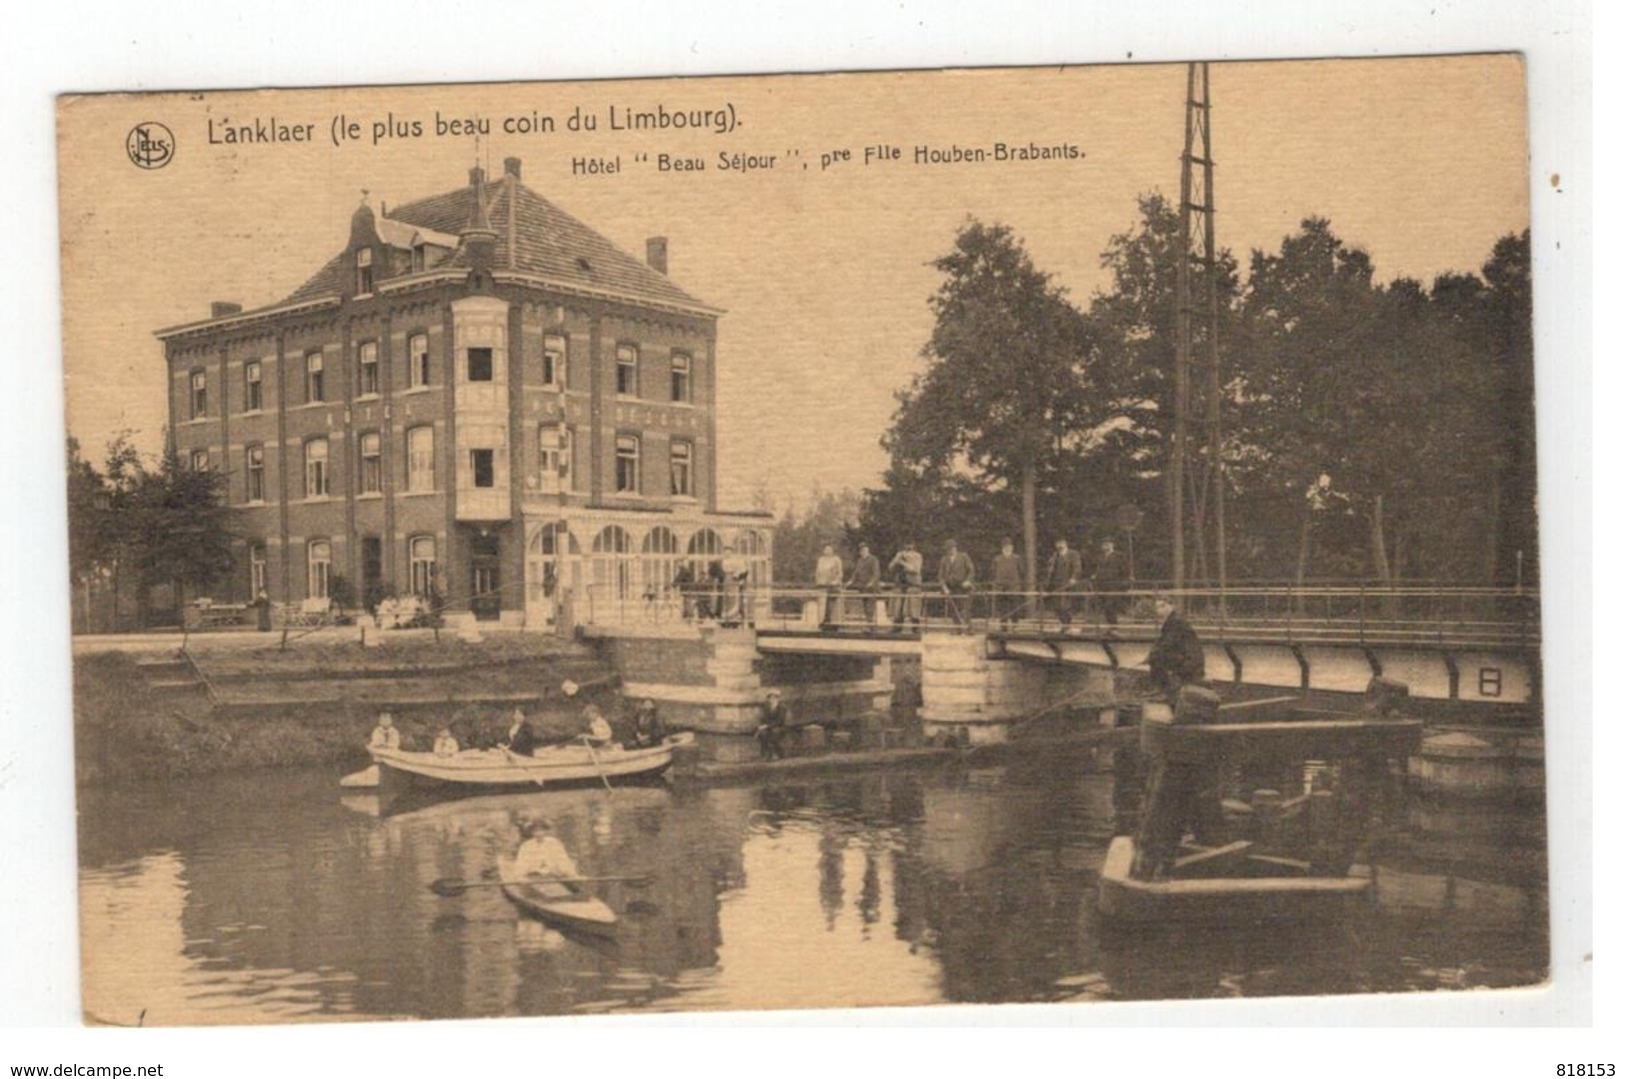 Lanklaar  Lanklaer Hôtel "Beau Séjour", Pre Flle Houben-Brabants 1921 - Dilsen-Stokkem